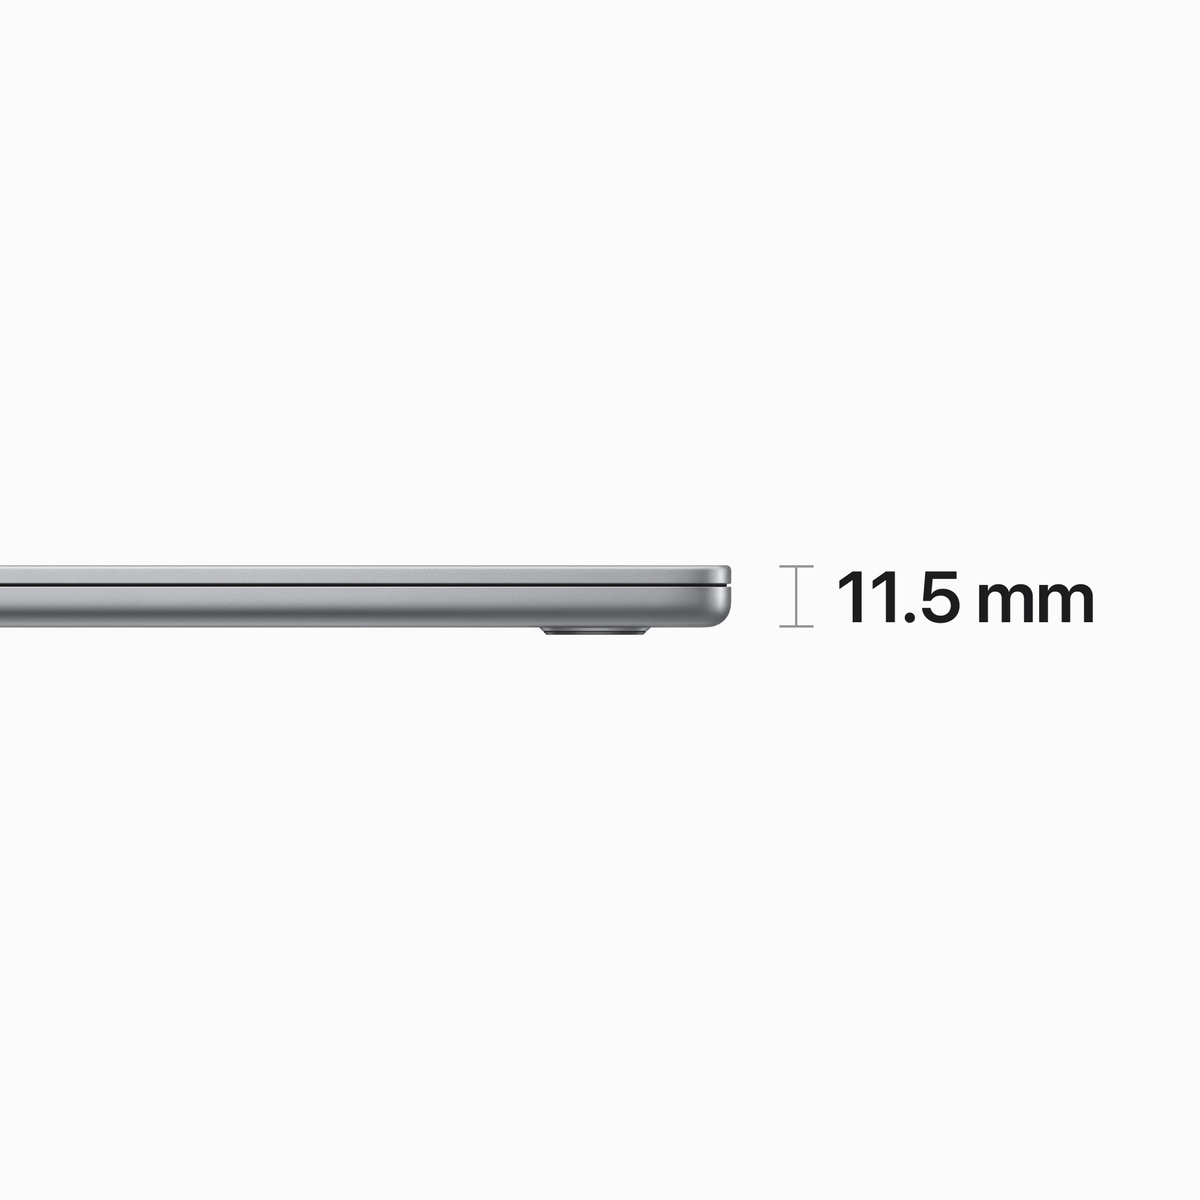 Apple MacBook Air M2 Chip, 15-inches, EN-AR Keyboard, 8 GB RAM, 256 GB Storage, Space Gray, MQKP3AB/A